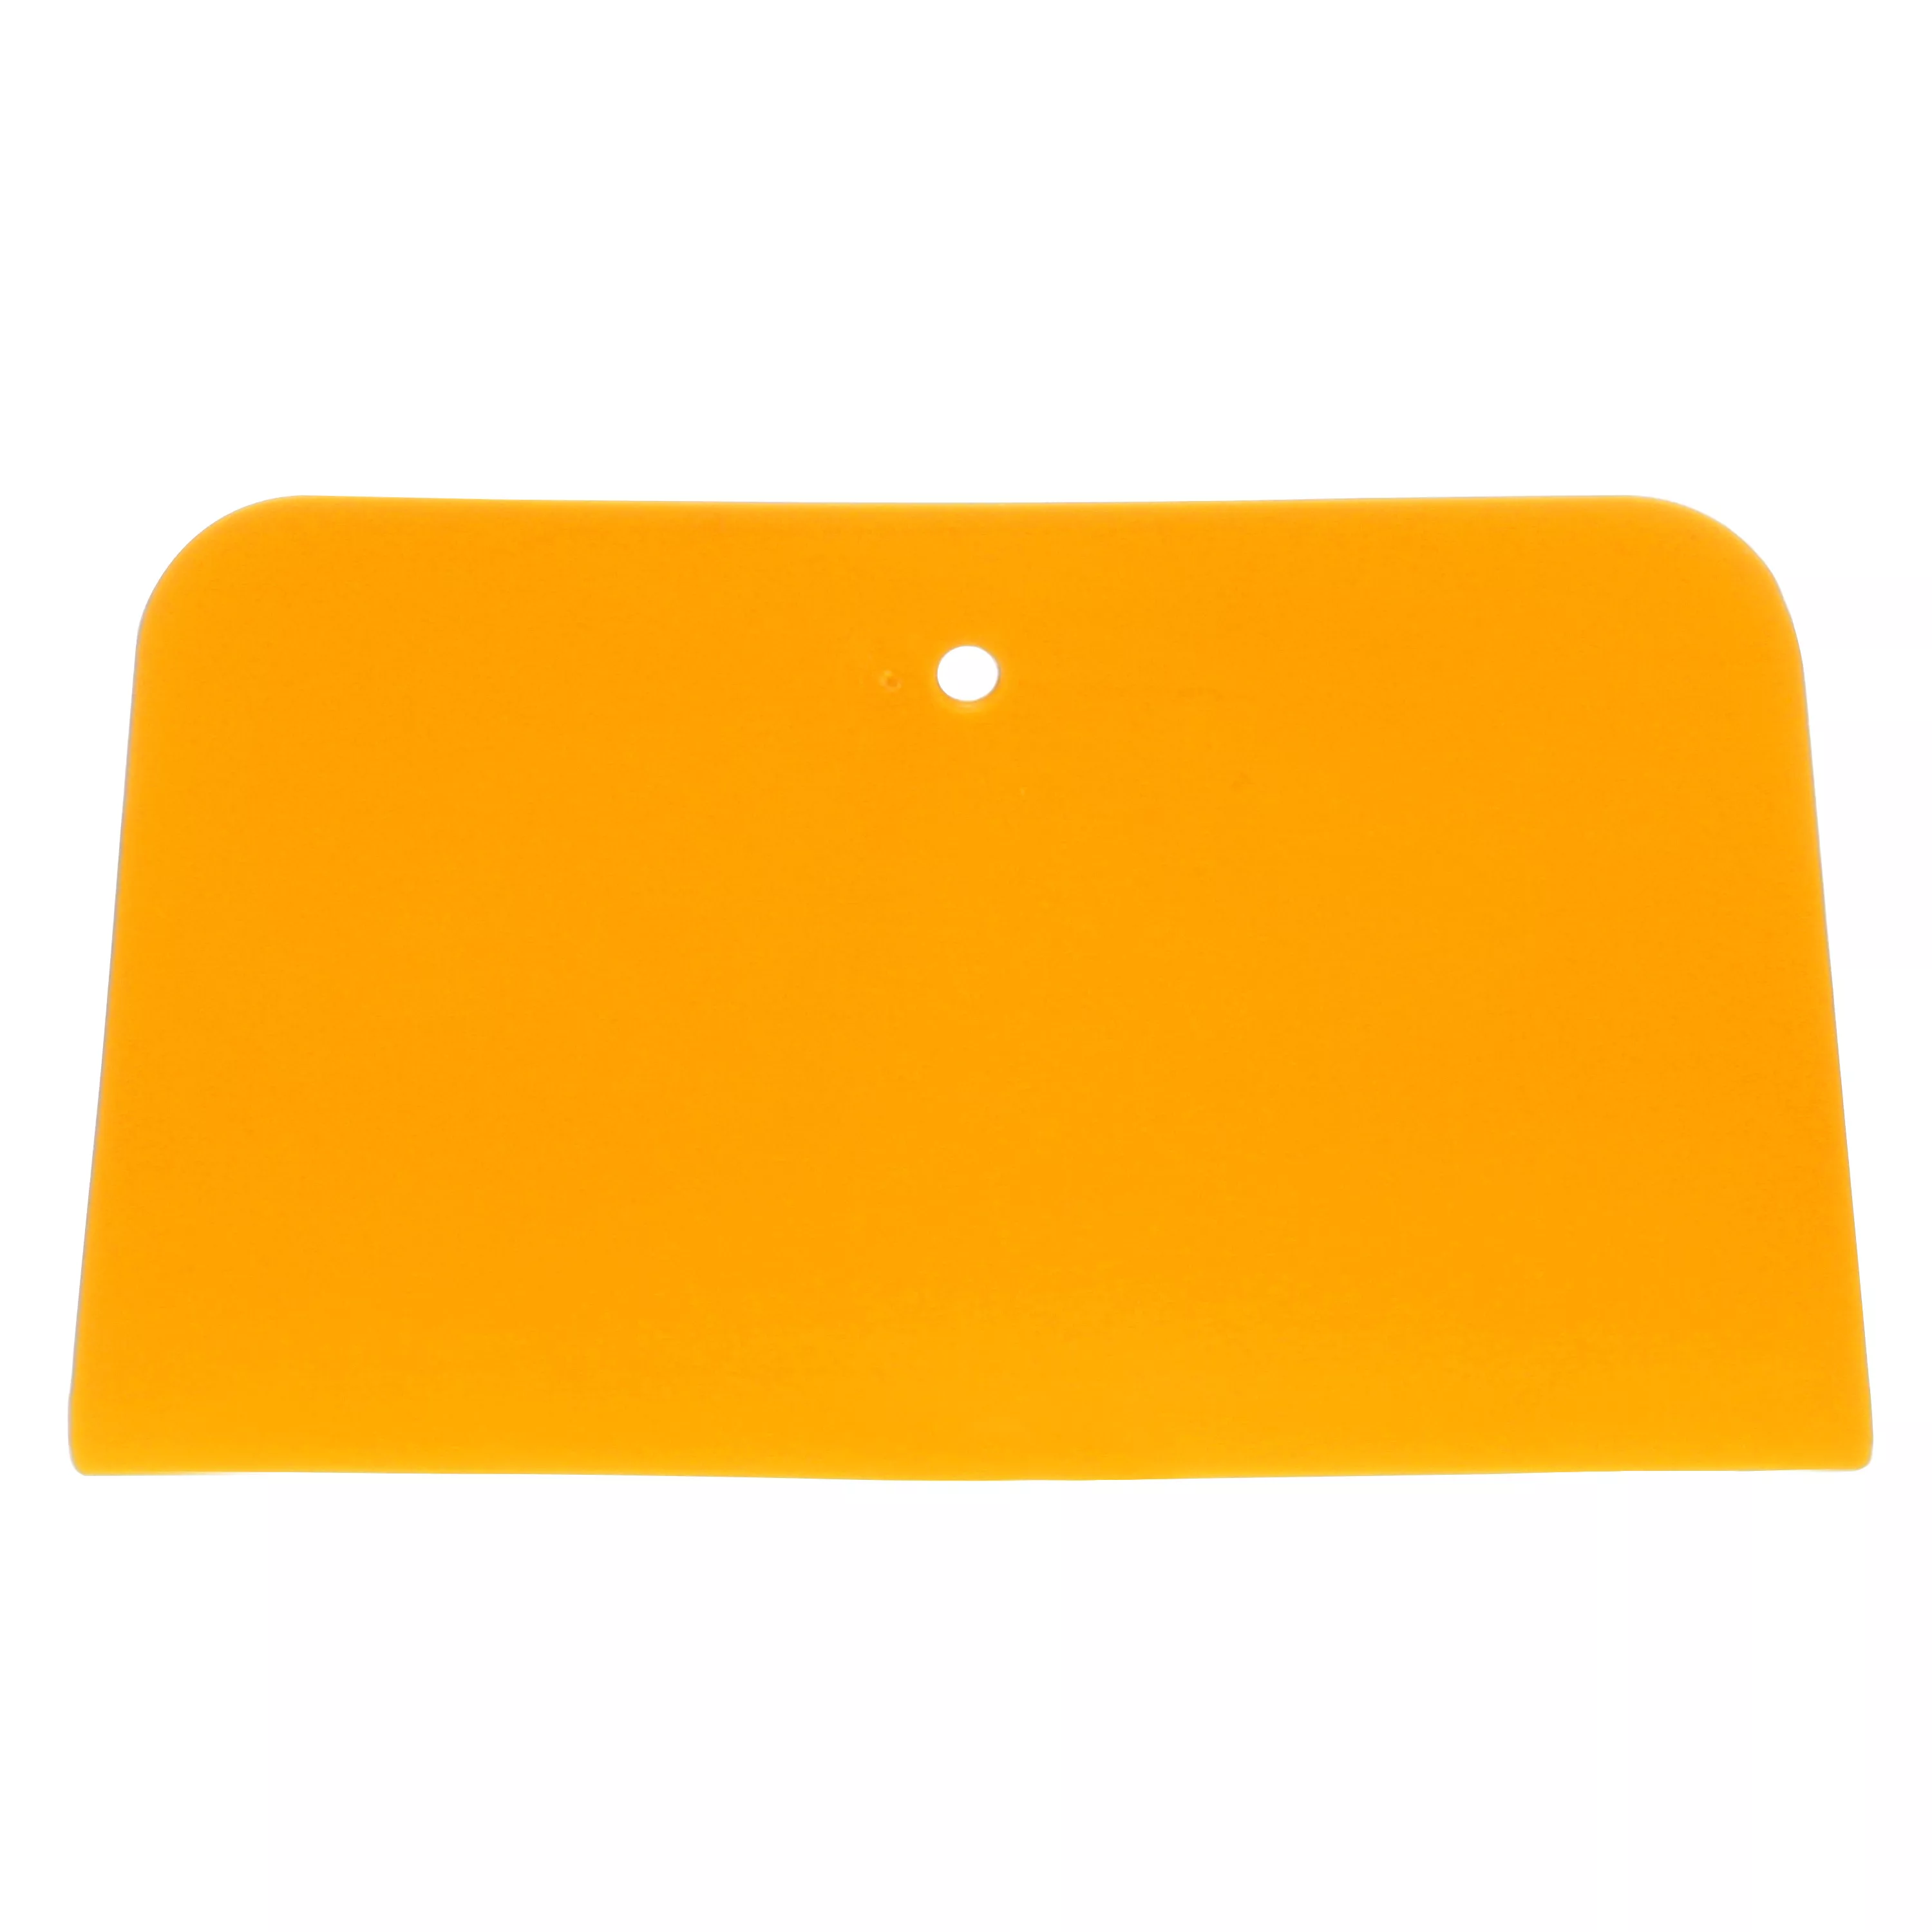 SKU 7000125086 | Dynatron™ Yellow Spreader